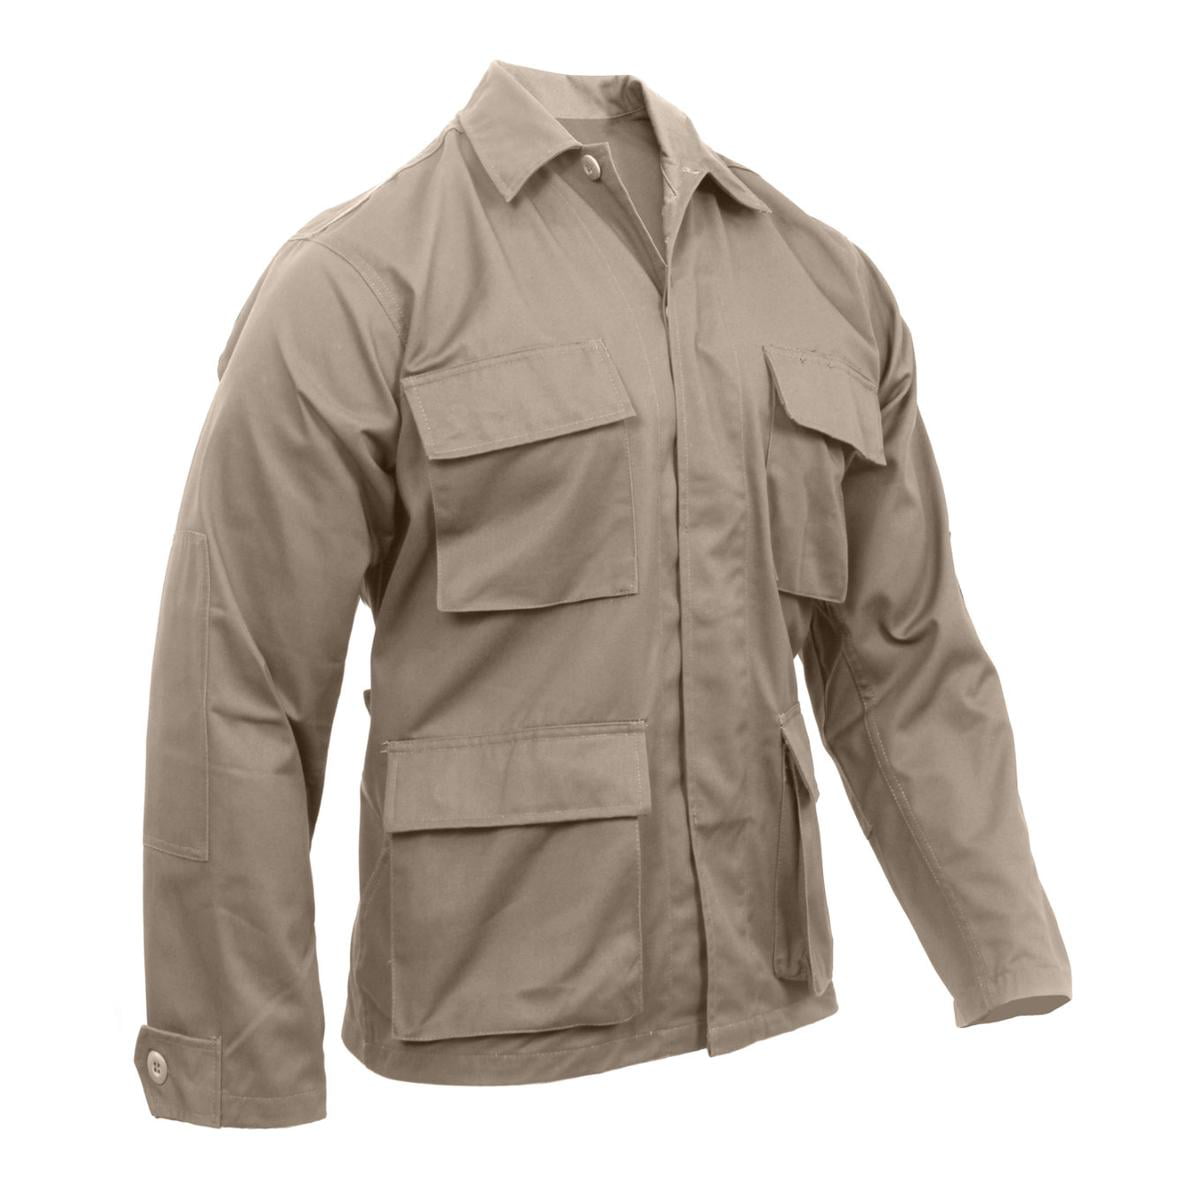 Khaki BDU shirts, military uniform shirts - Walmart.com